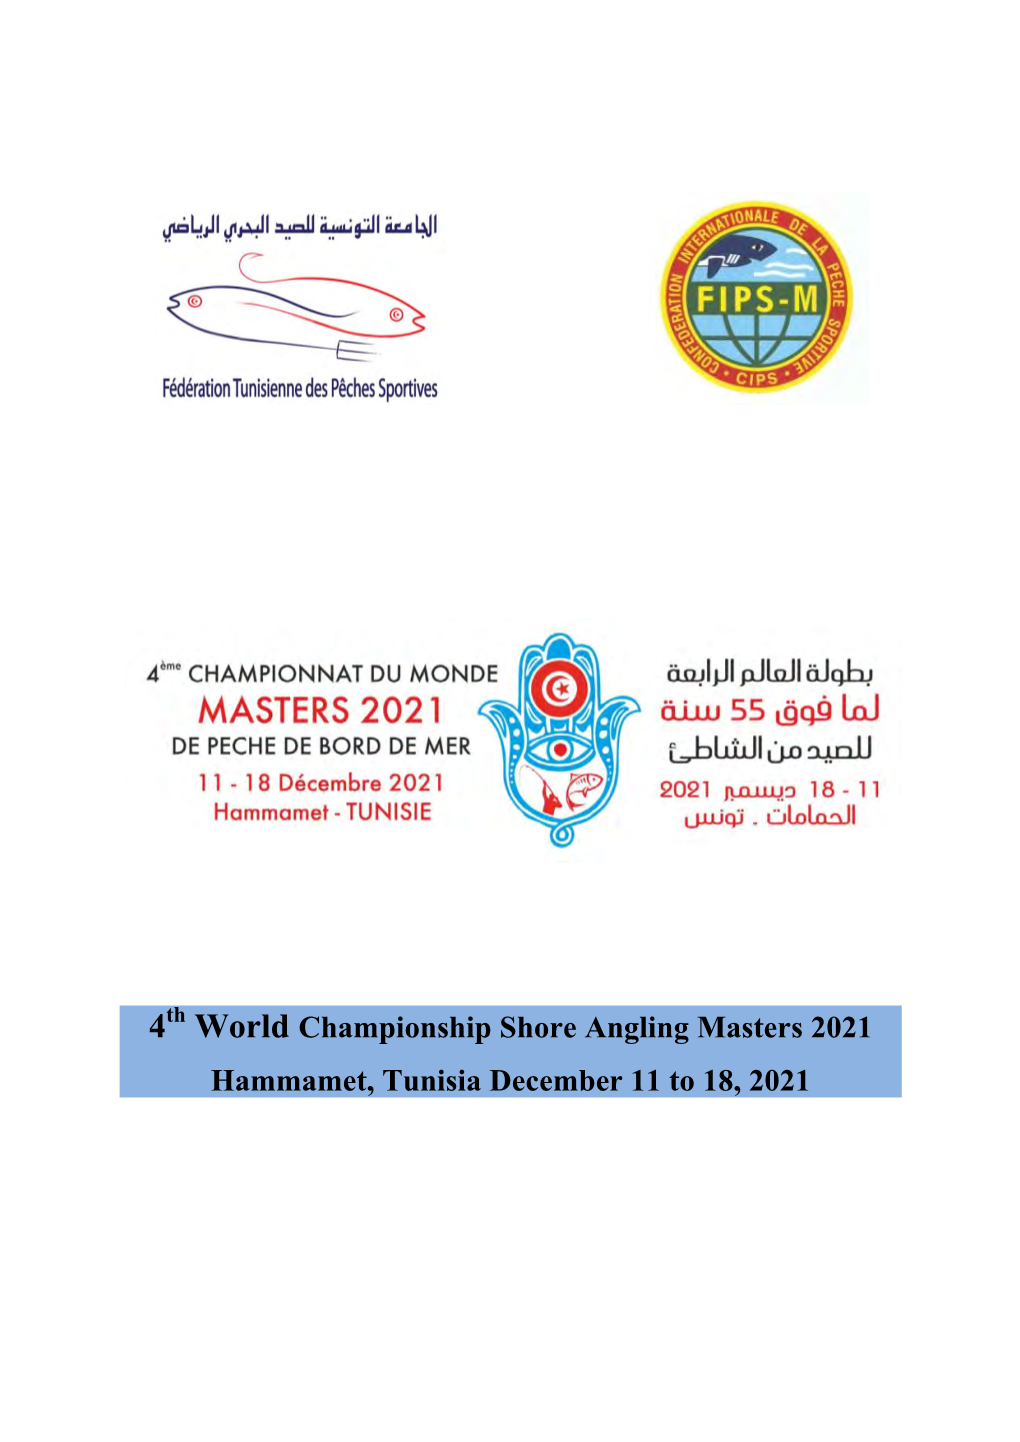 4Th World Championship Shore Angling Masters 2021 Hammamet, Tunisia December 11 to 18, 2021